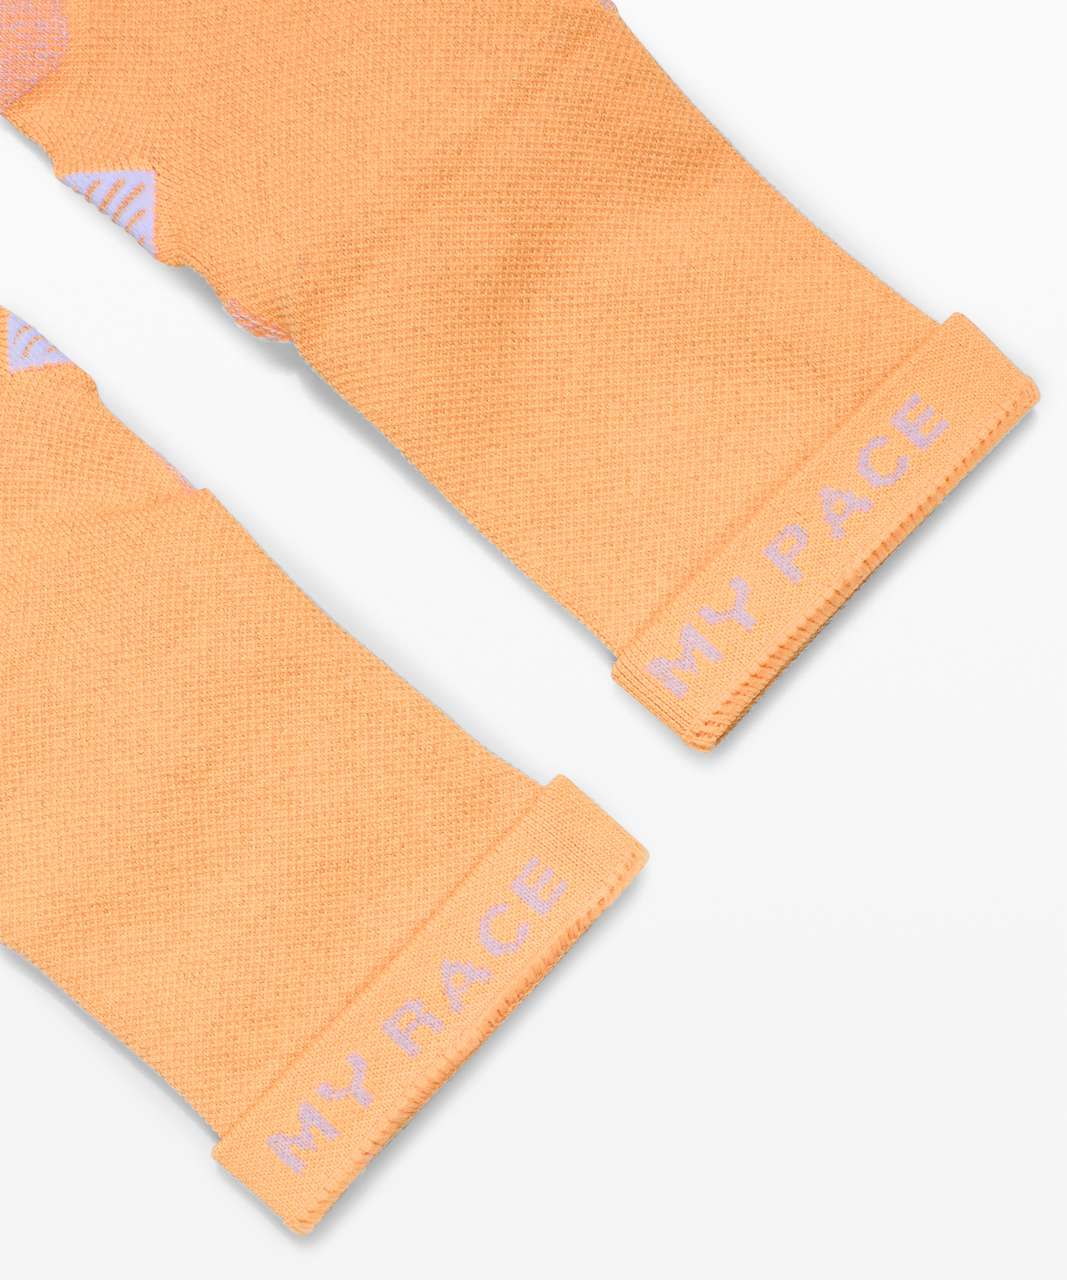 Lululemon Speed Quarter Sock (Silver) *SeaWheeze - Florid Orange / White